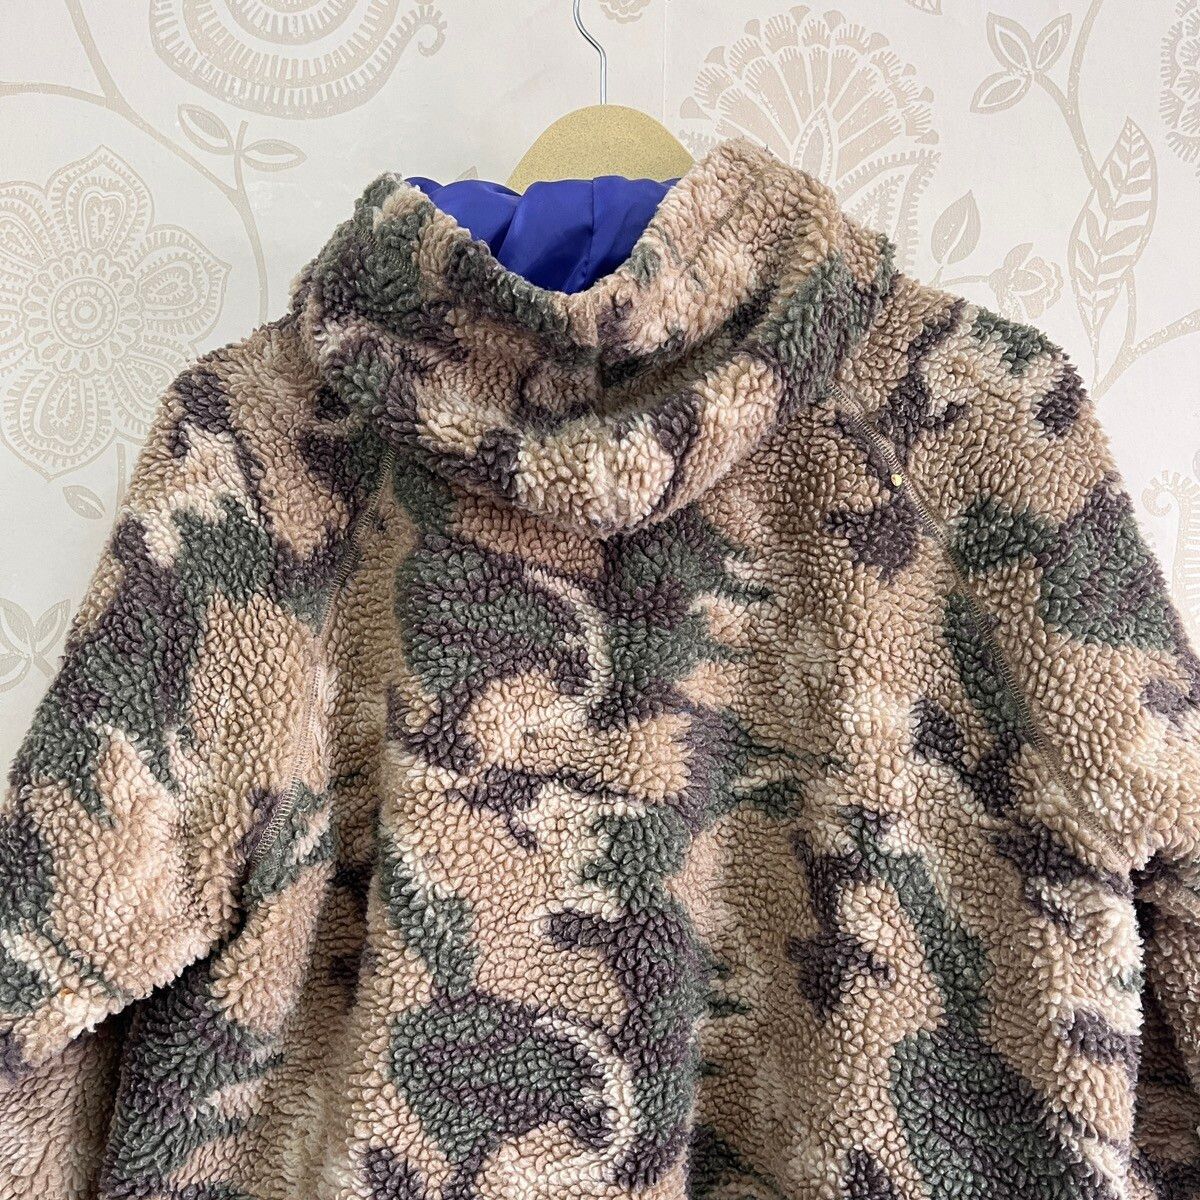 Military - Markey's Big Field Camouflage Sweater Hoodie Japanese - 19